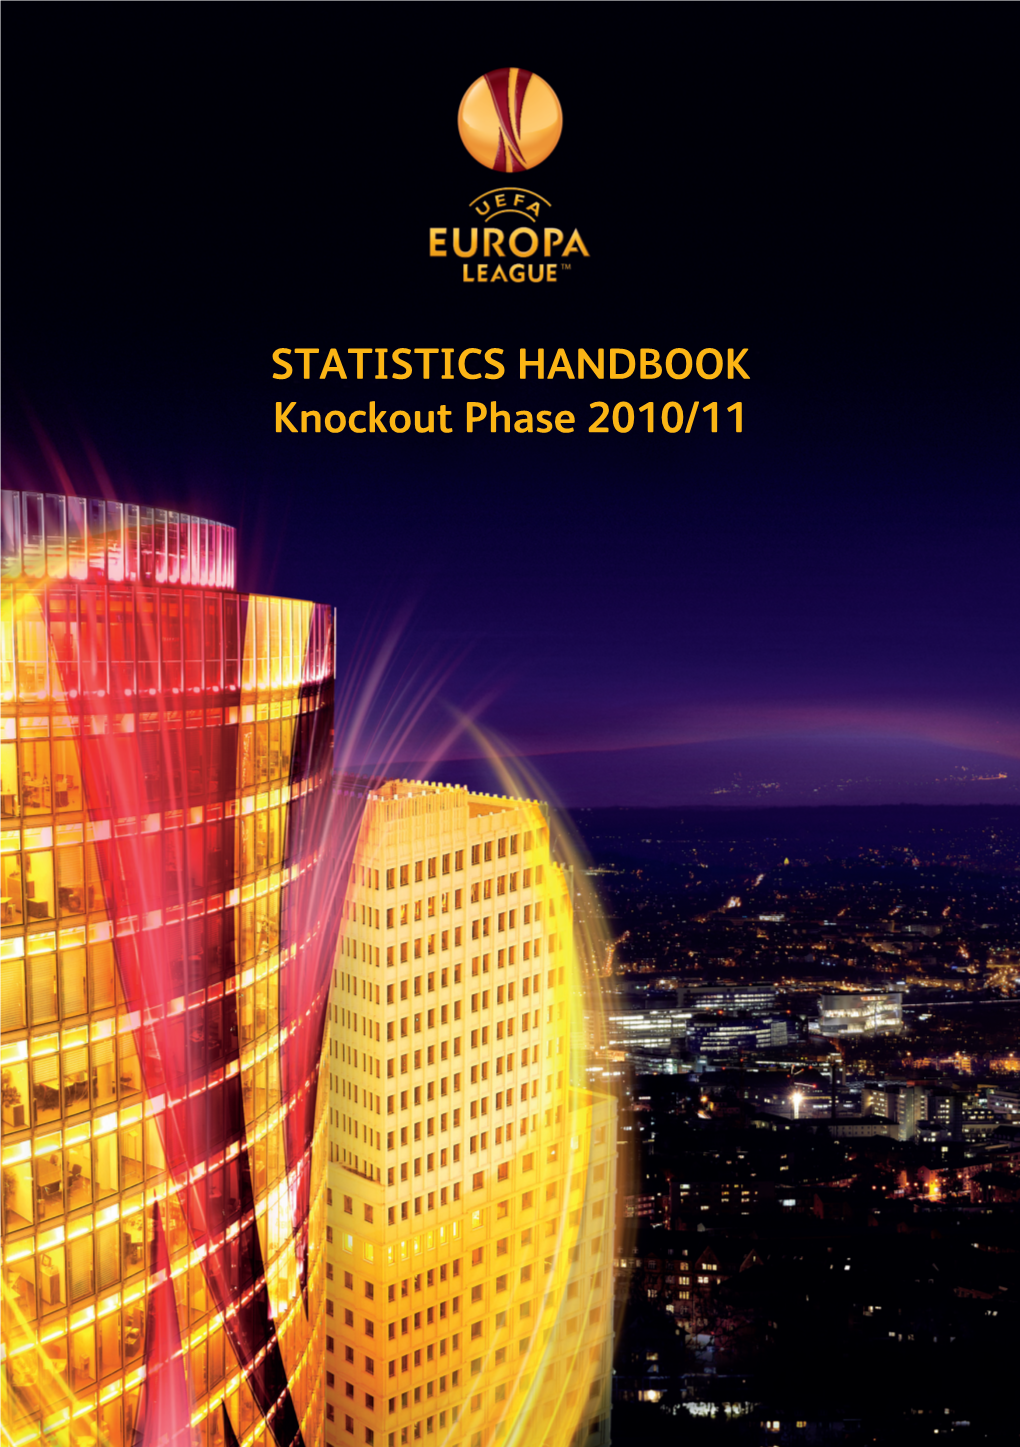 UEFA Europa League Statistics Handbook Do Not Necessarily Reflect Those of UEFA